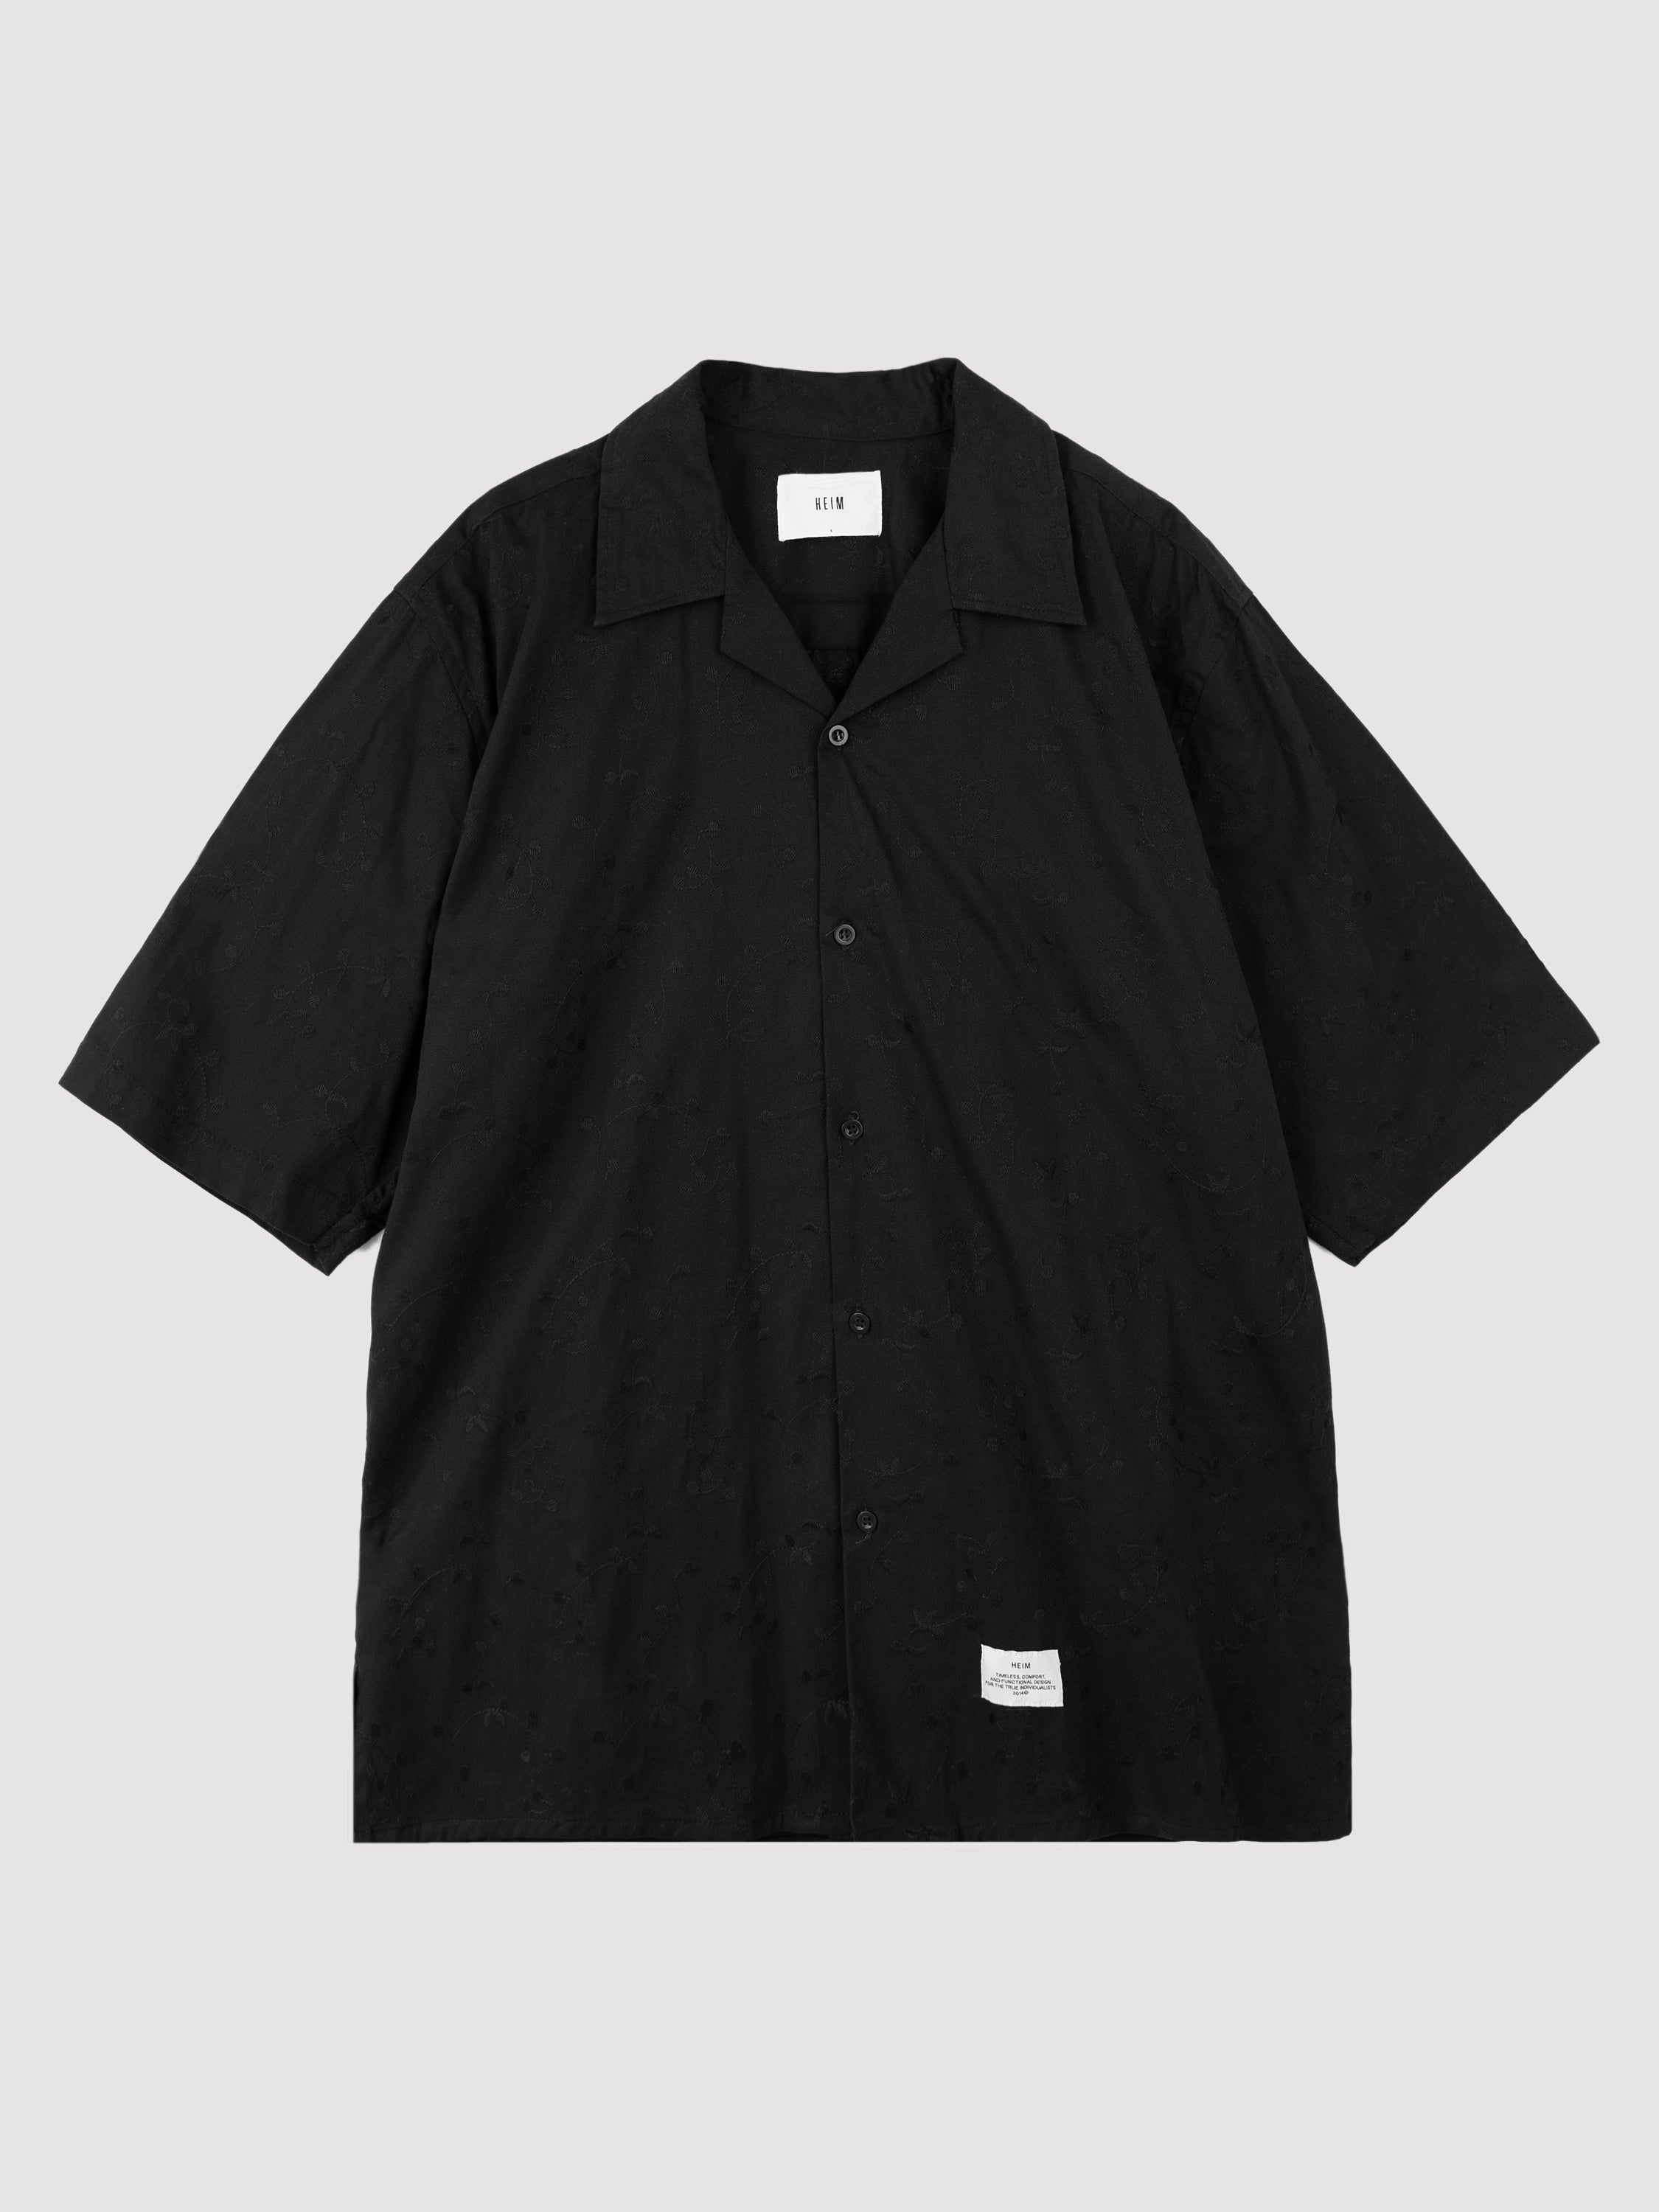 Easy Black Flower Pattern Shirt - Men / Shirts | HEIM